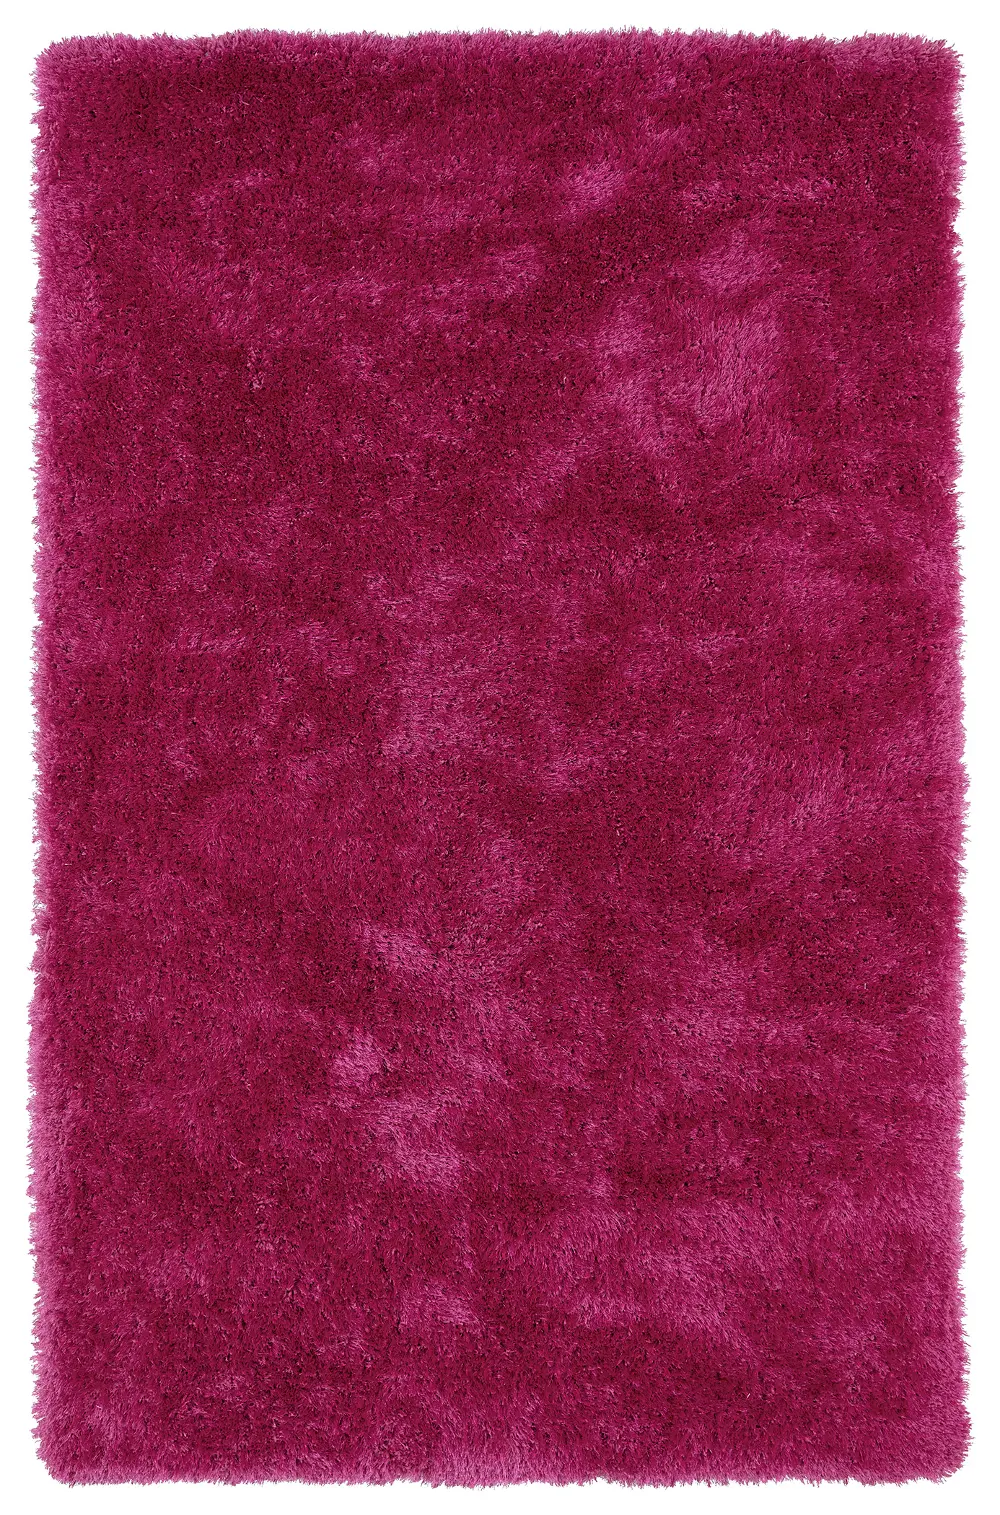 3 x 5 Small Pink Shag Rug - Posh-1